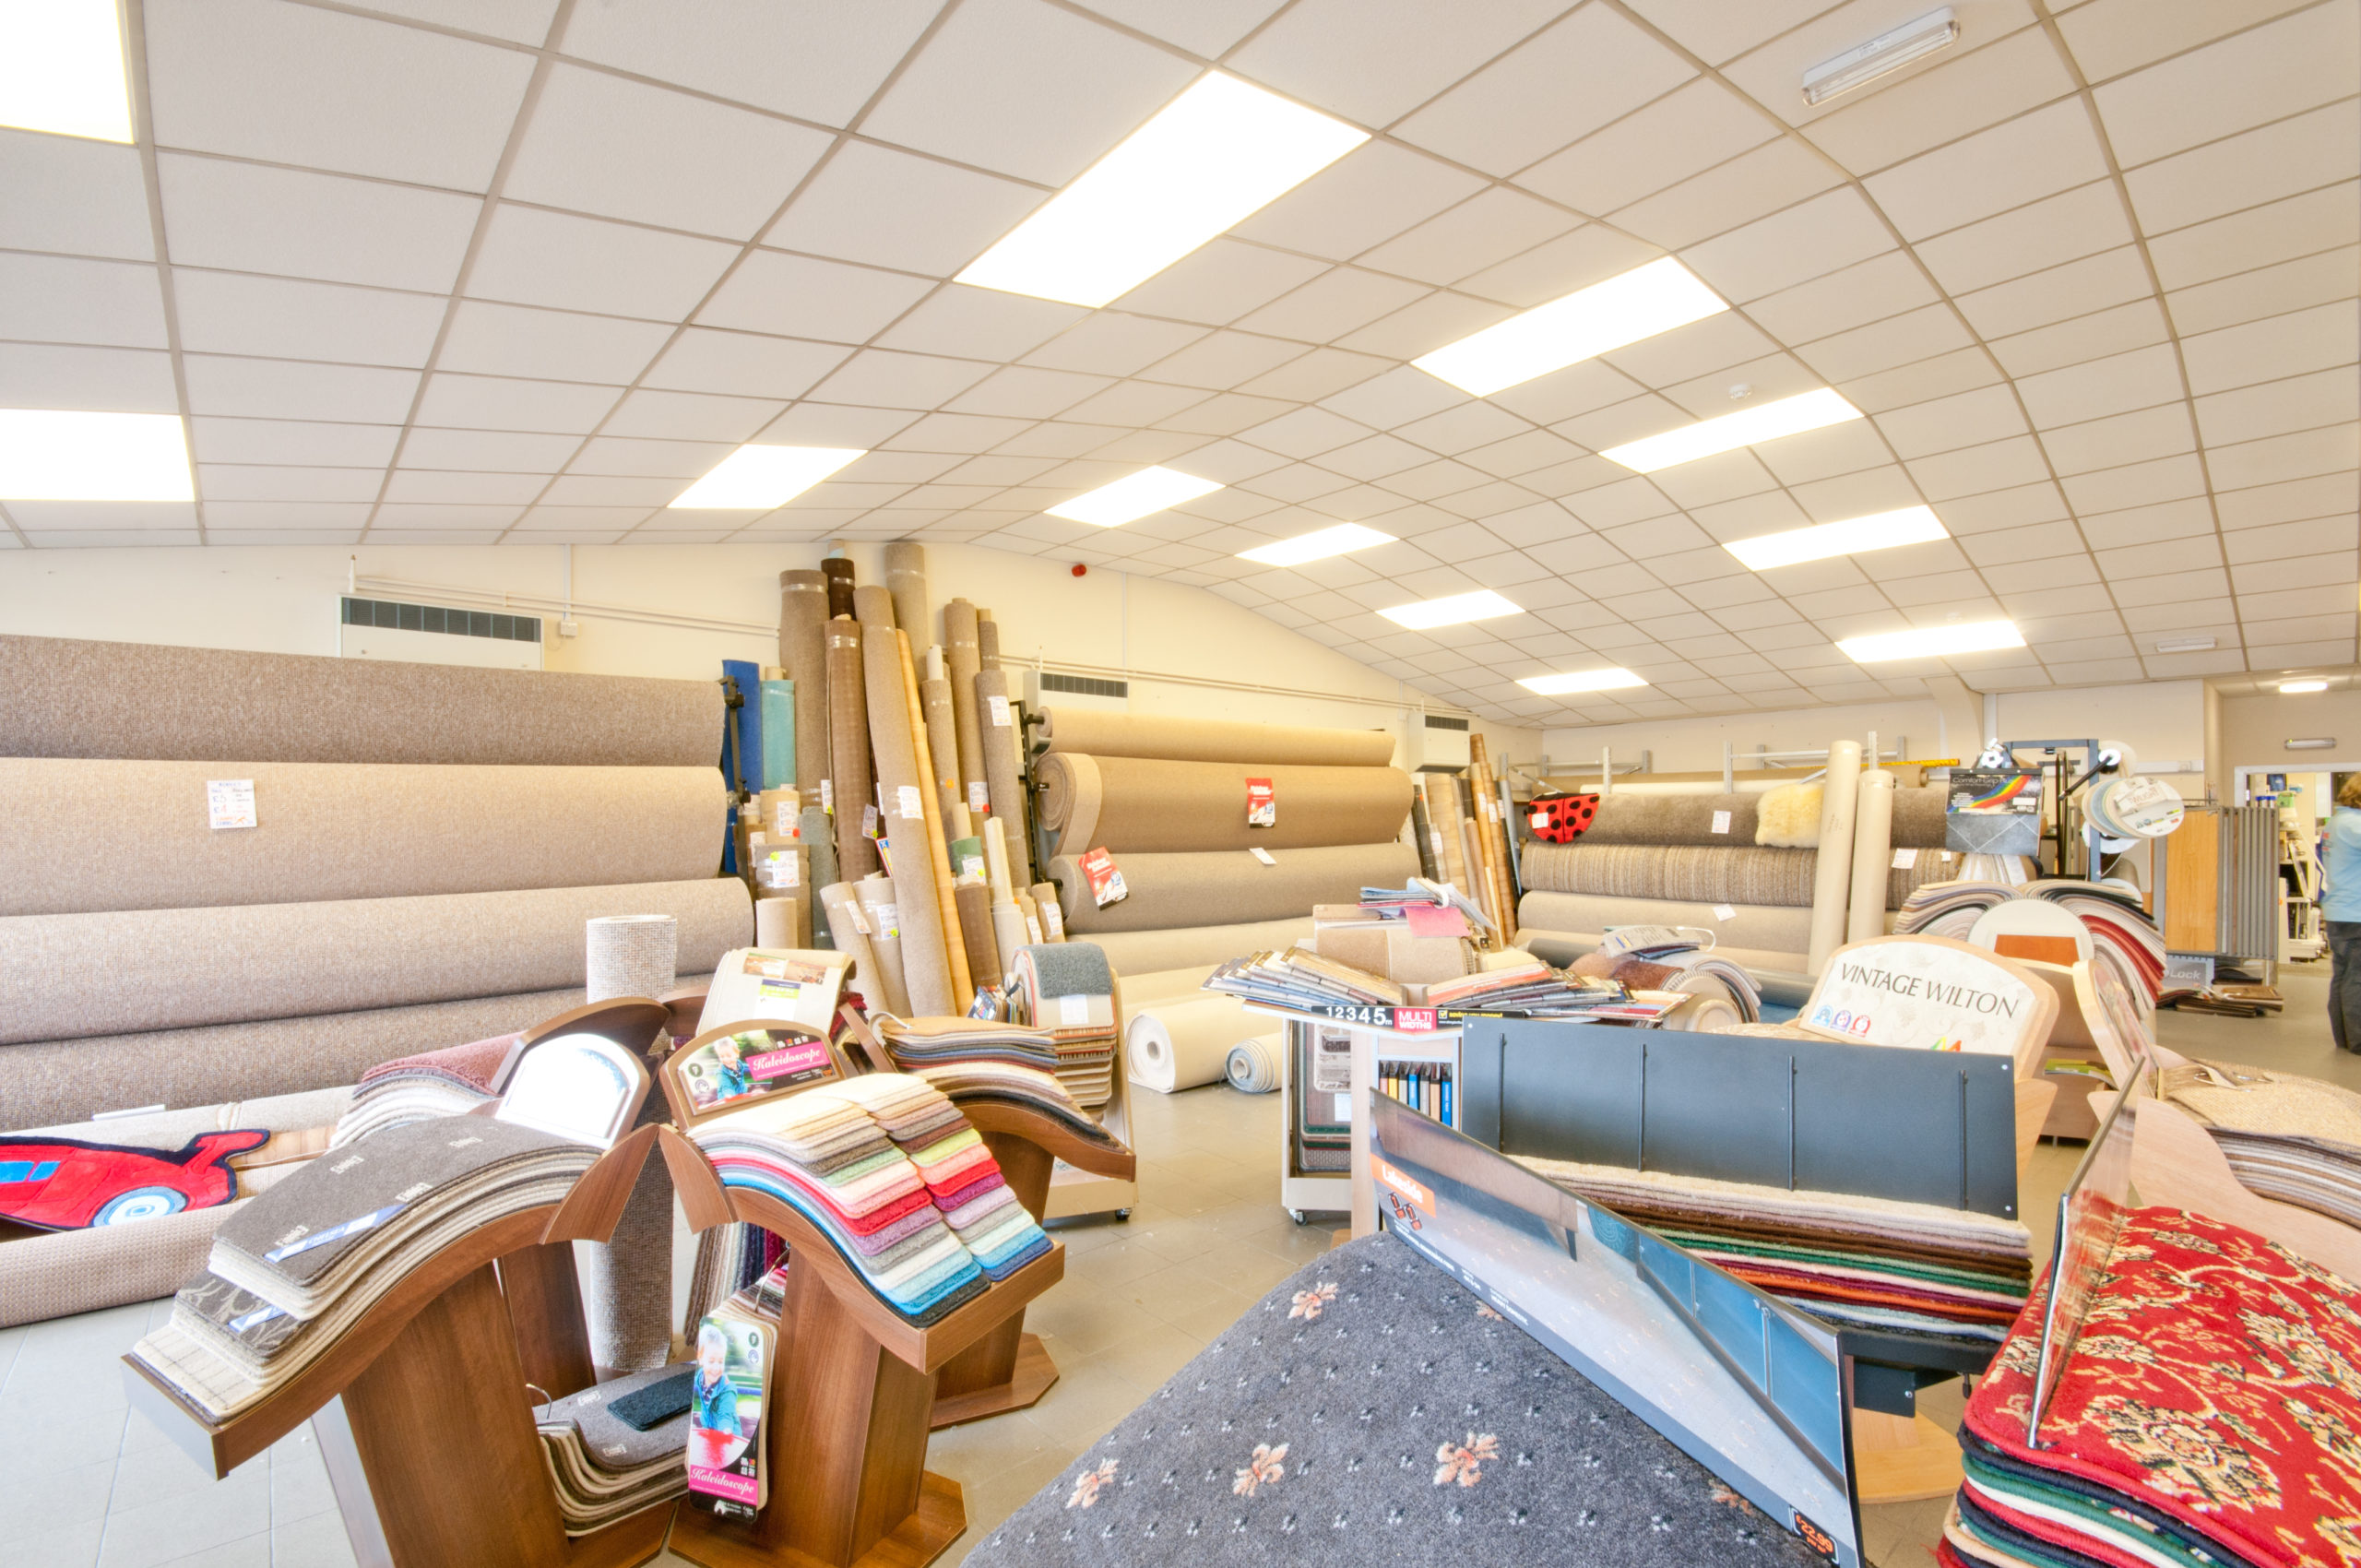 A room full of carpets located at 352 Pelham Road, Immingham.